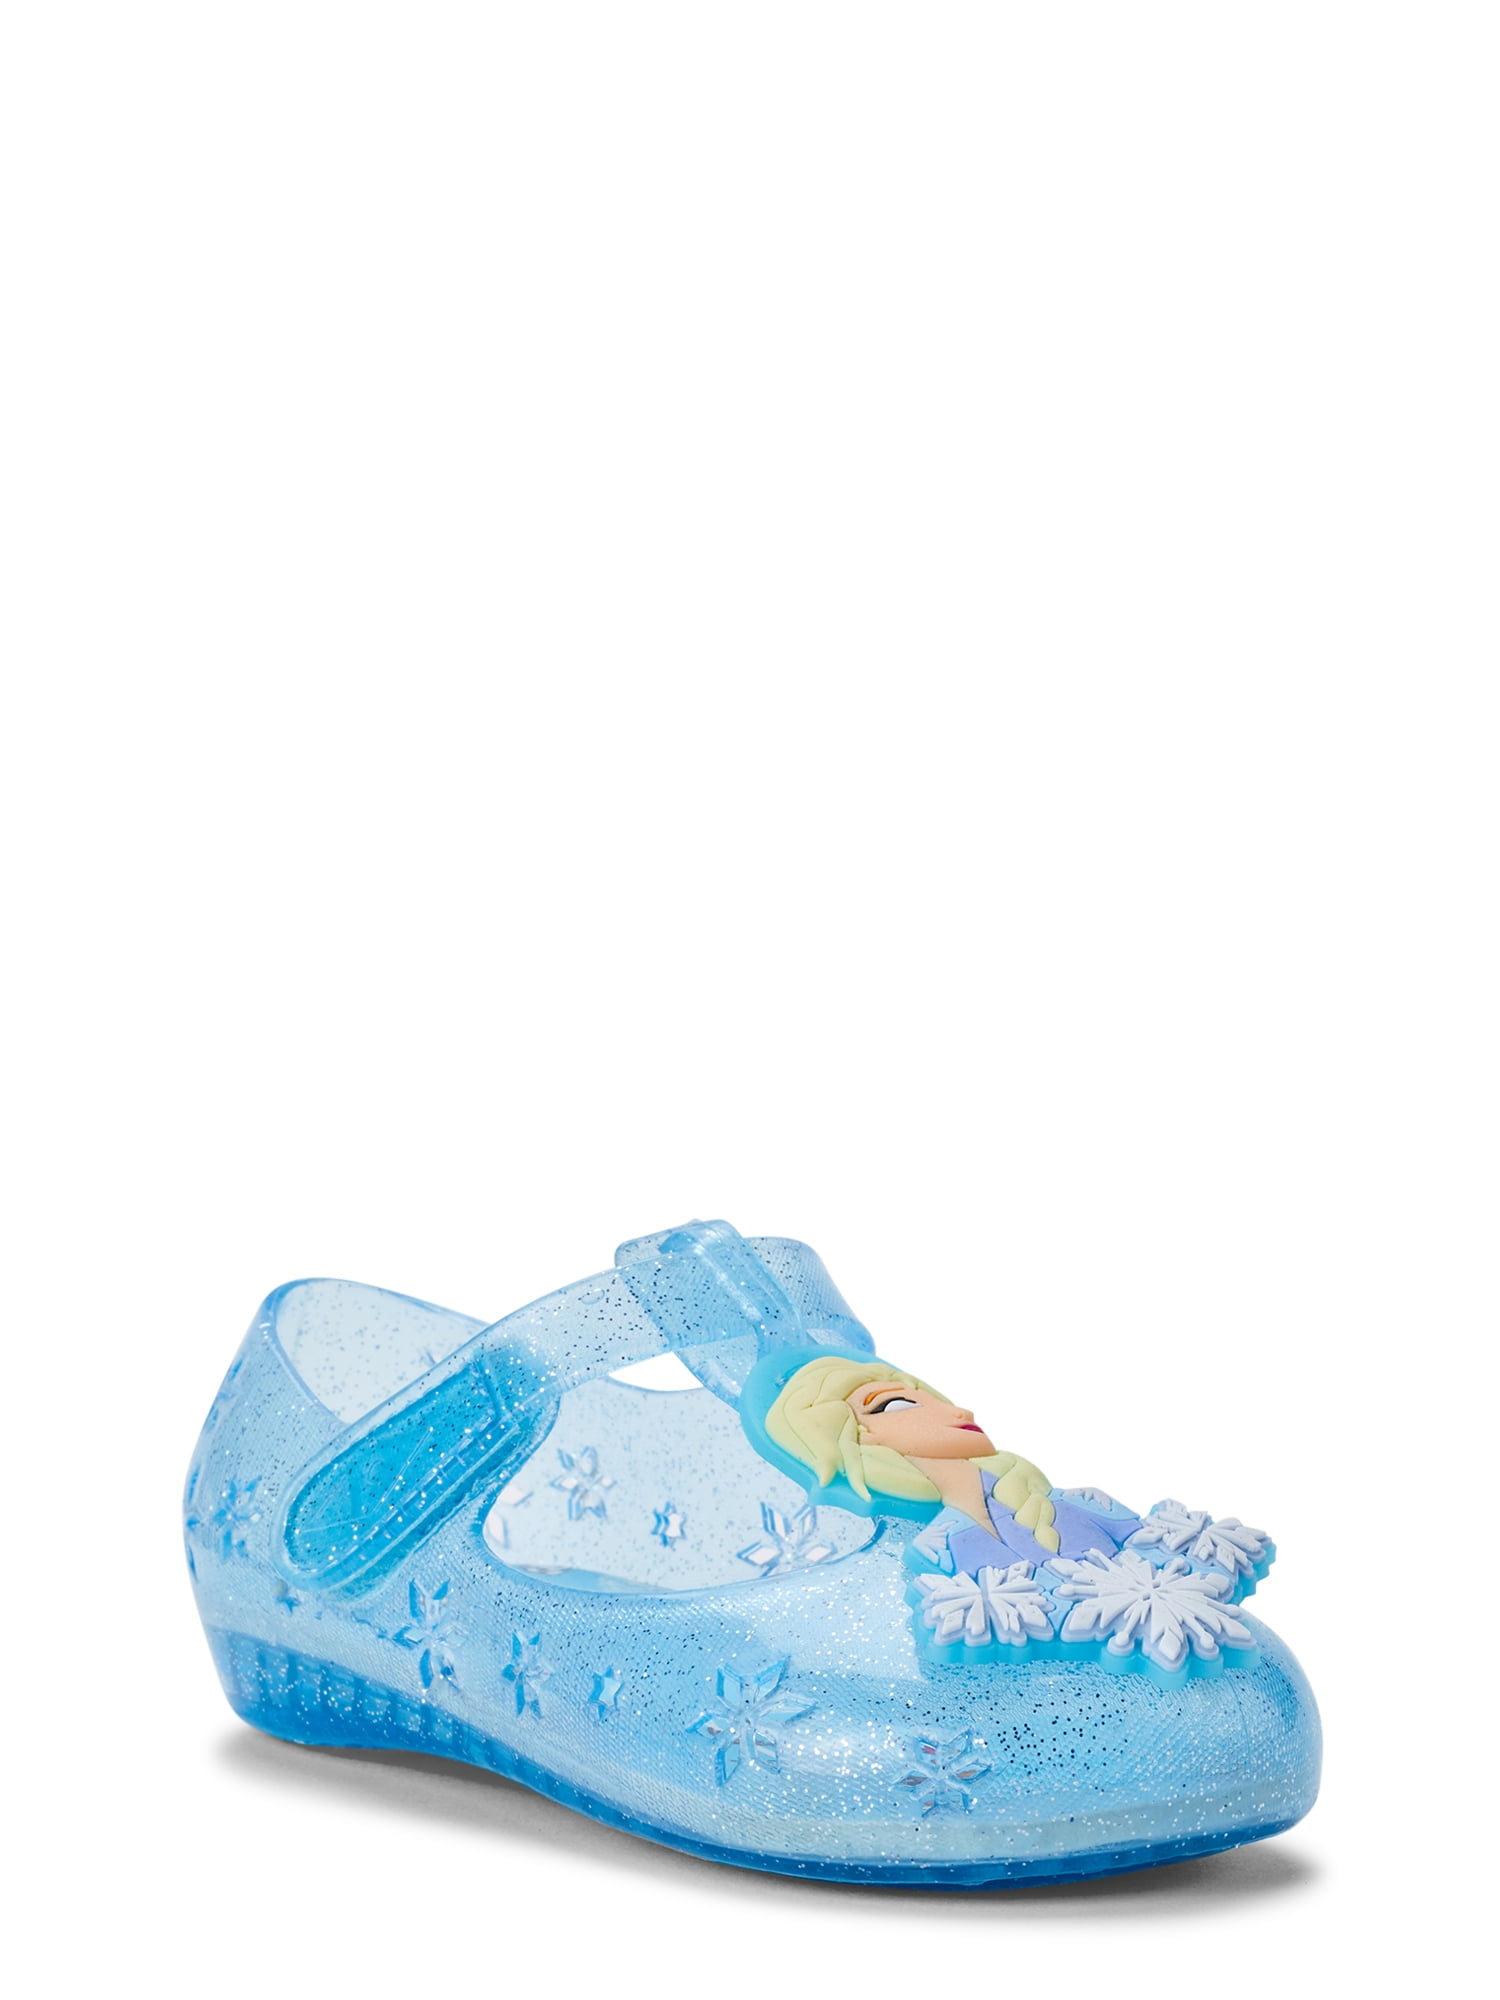 Disney Frozen Disney Frozen 2 Casual Jelly Shoe (Toddler